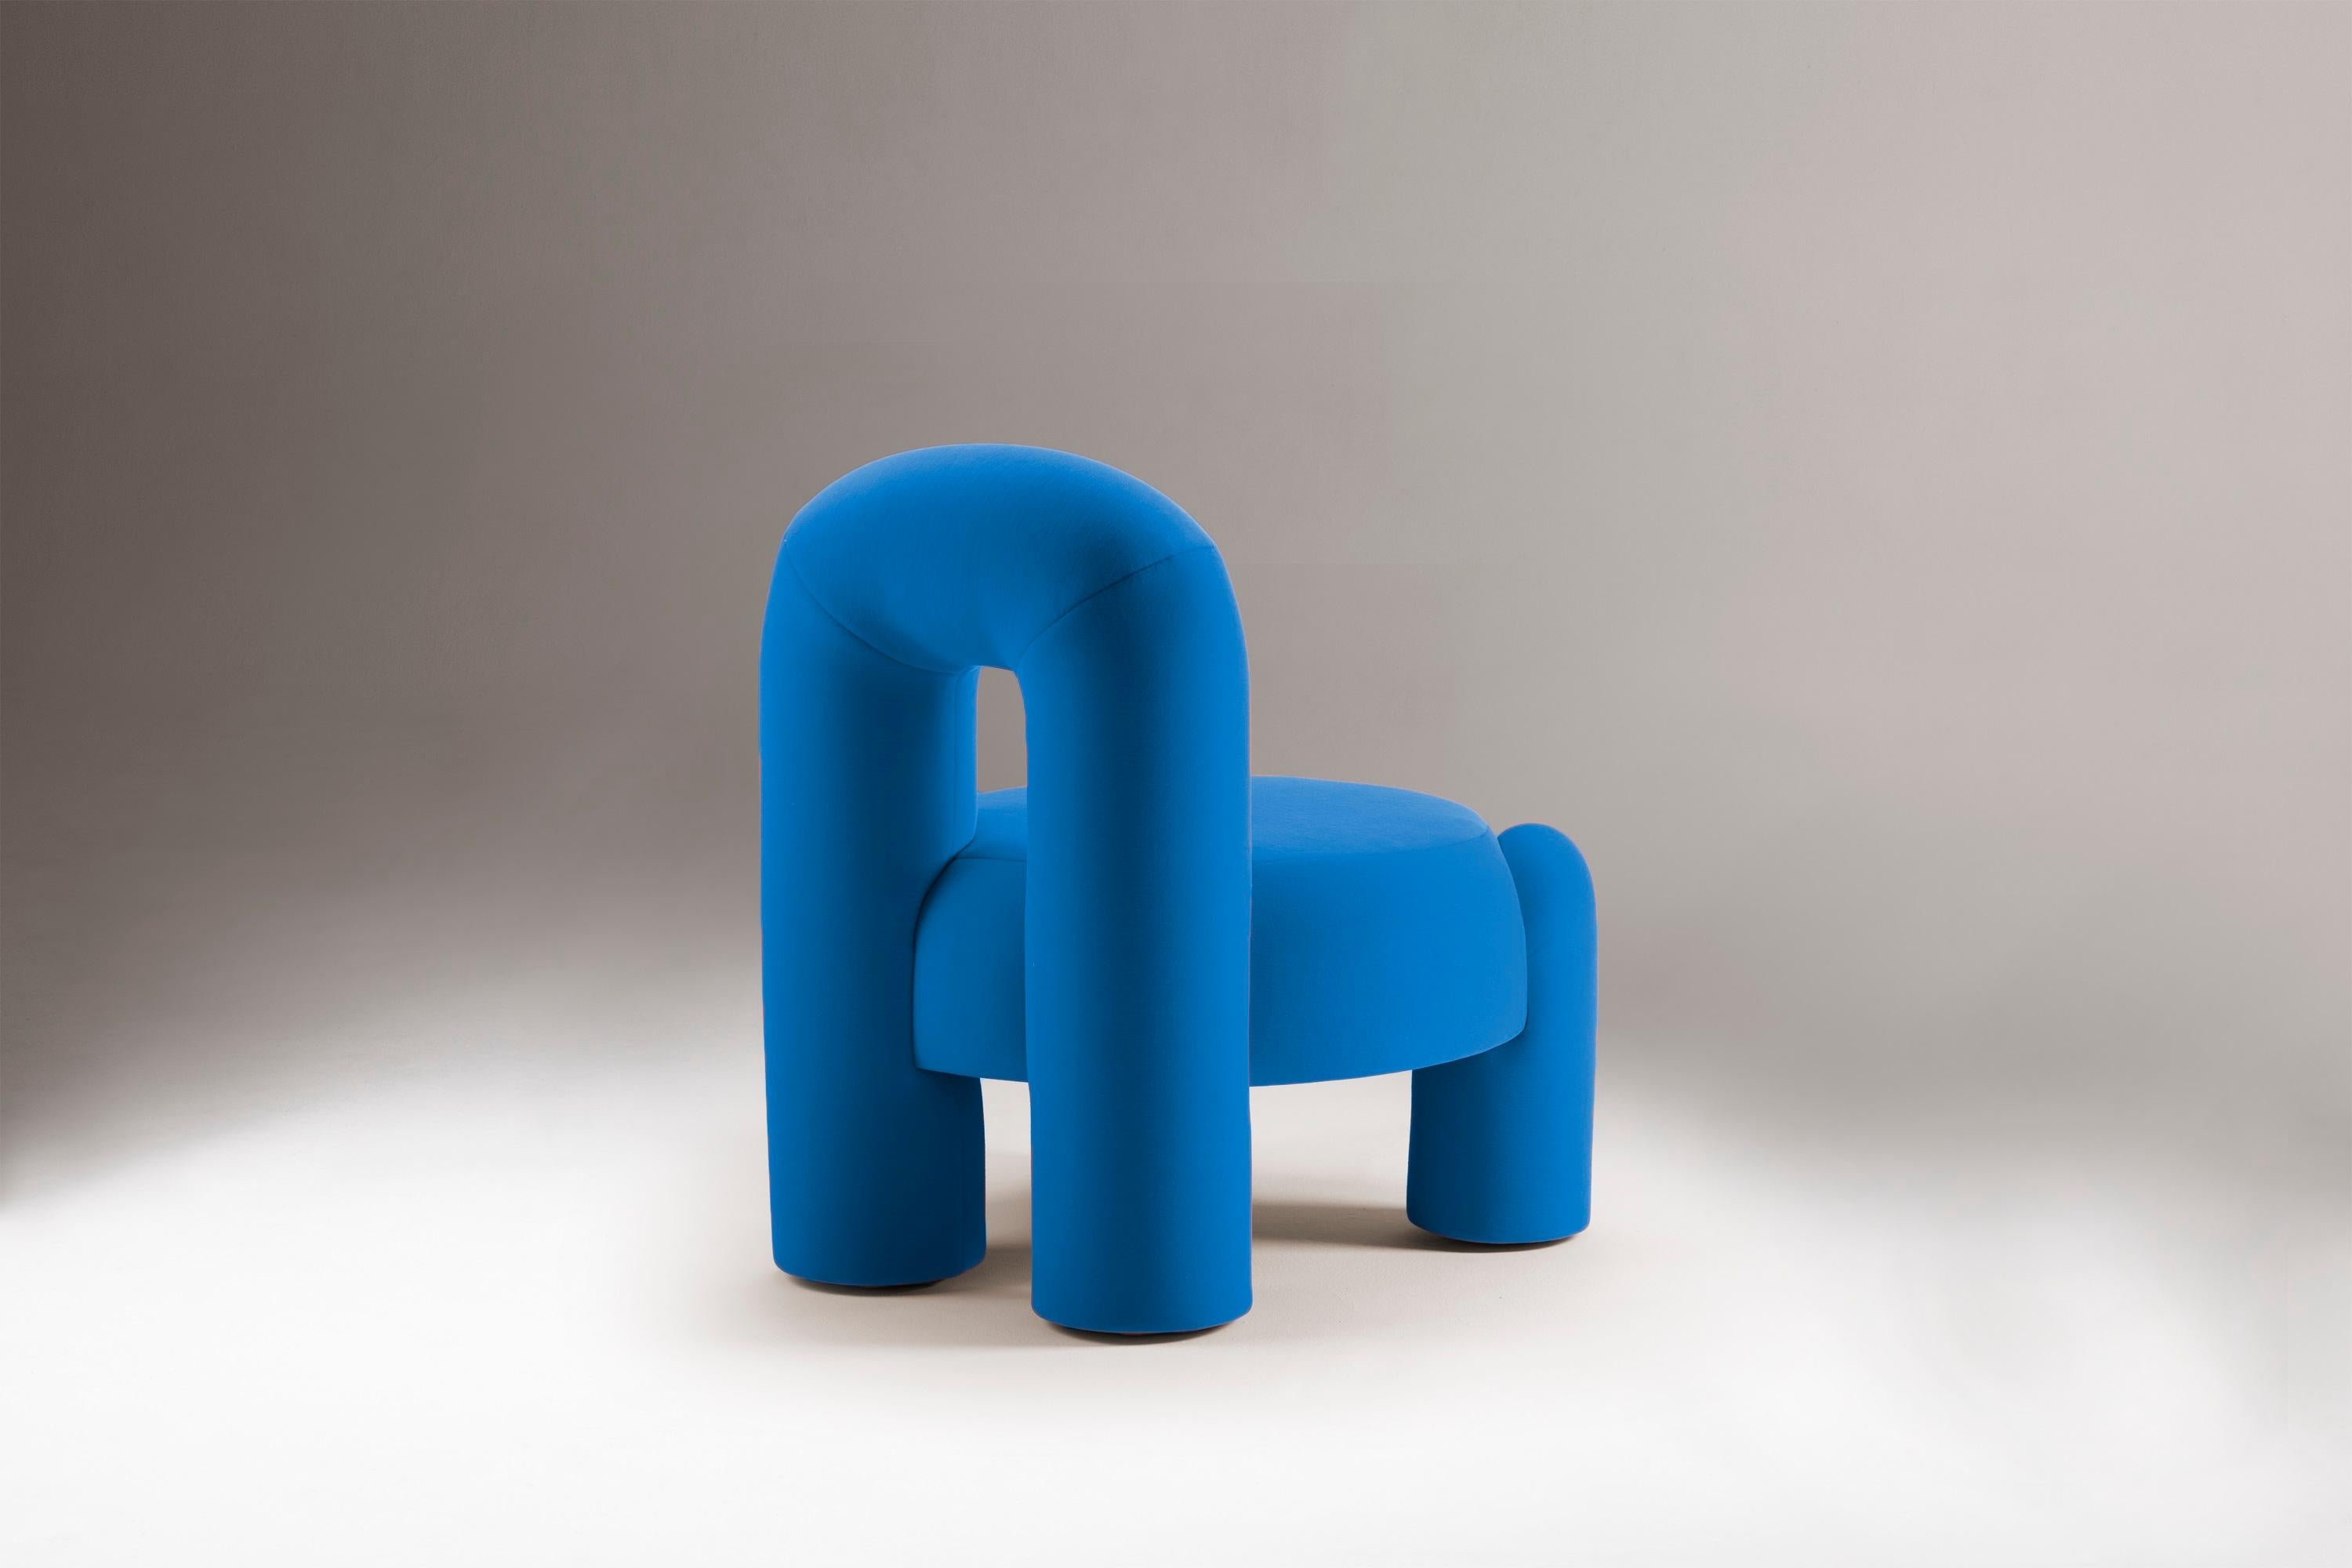 Portuguese DOOQ! Milan New! Organic Modern Marlon Chair, Blue Kvadrat by P.Franceschini For Sale